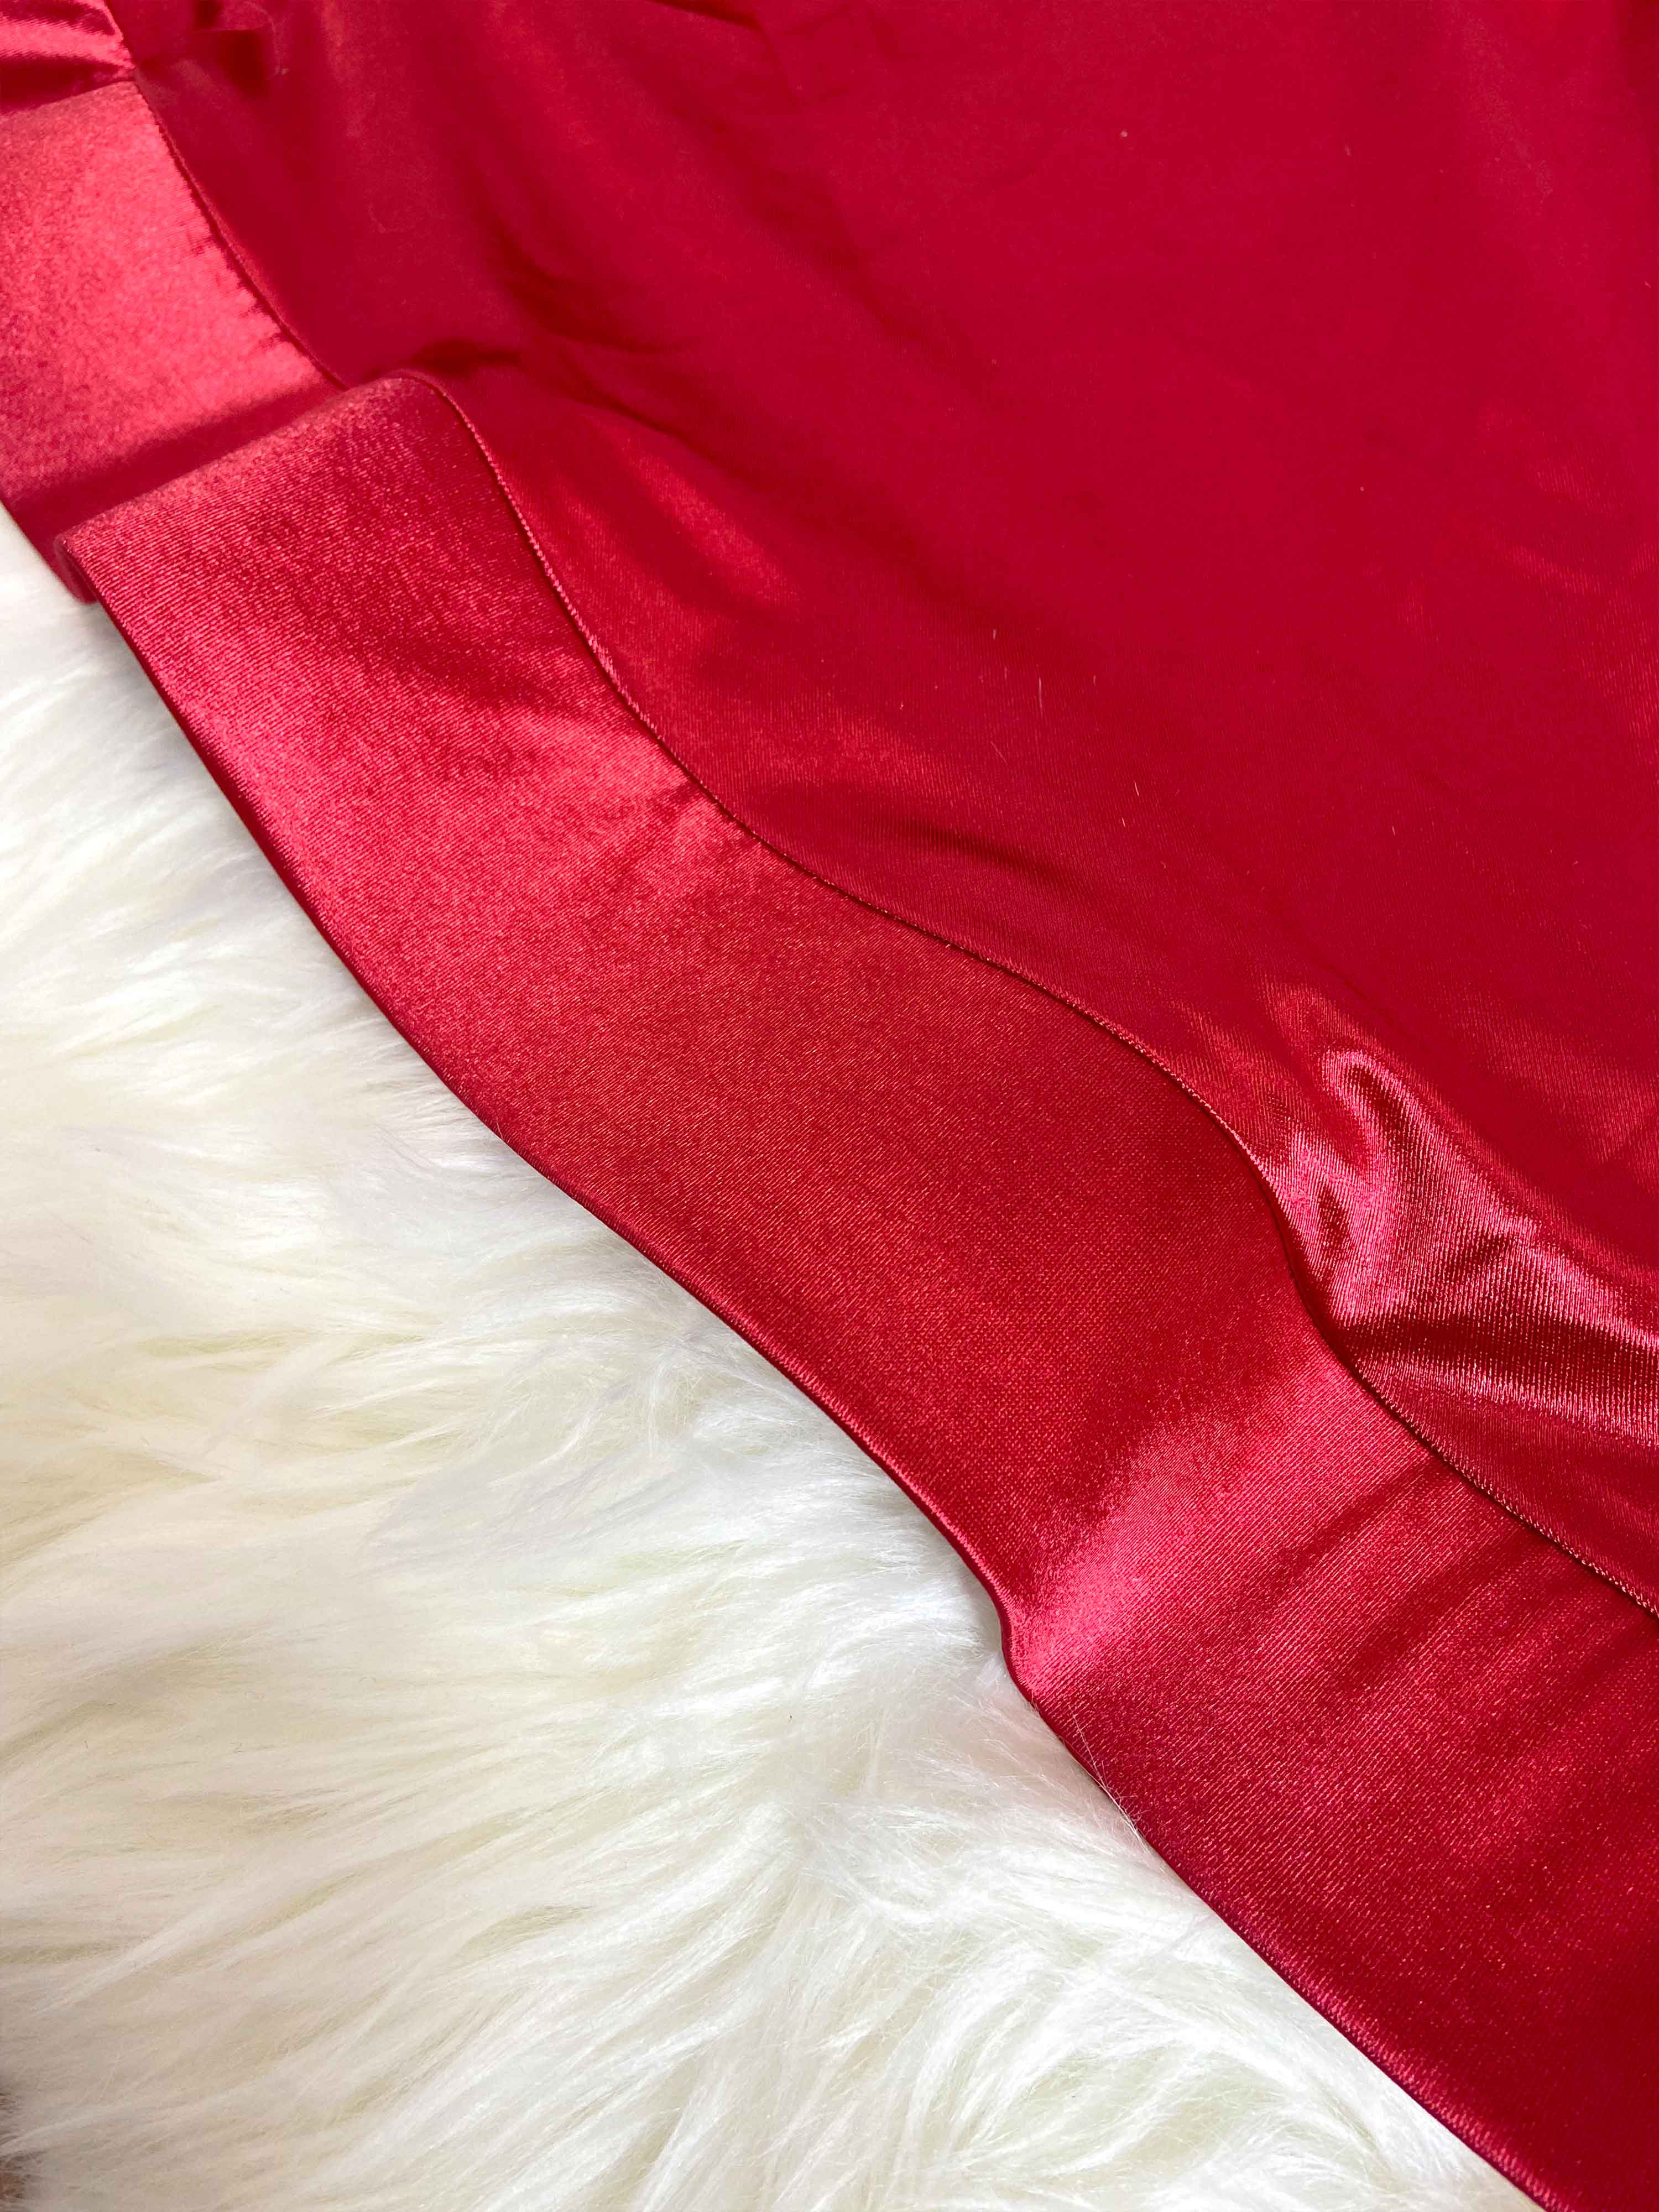 Red Fringe and Rhinestone Sleeveless Maxi Gown